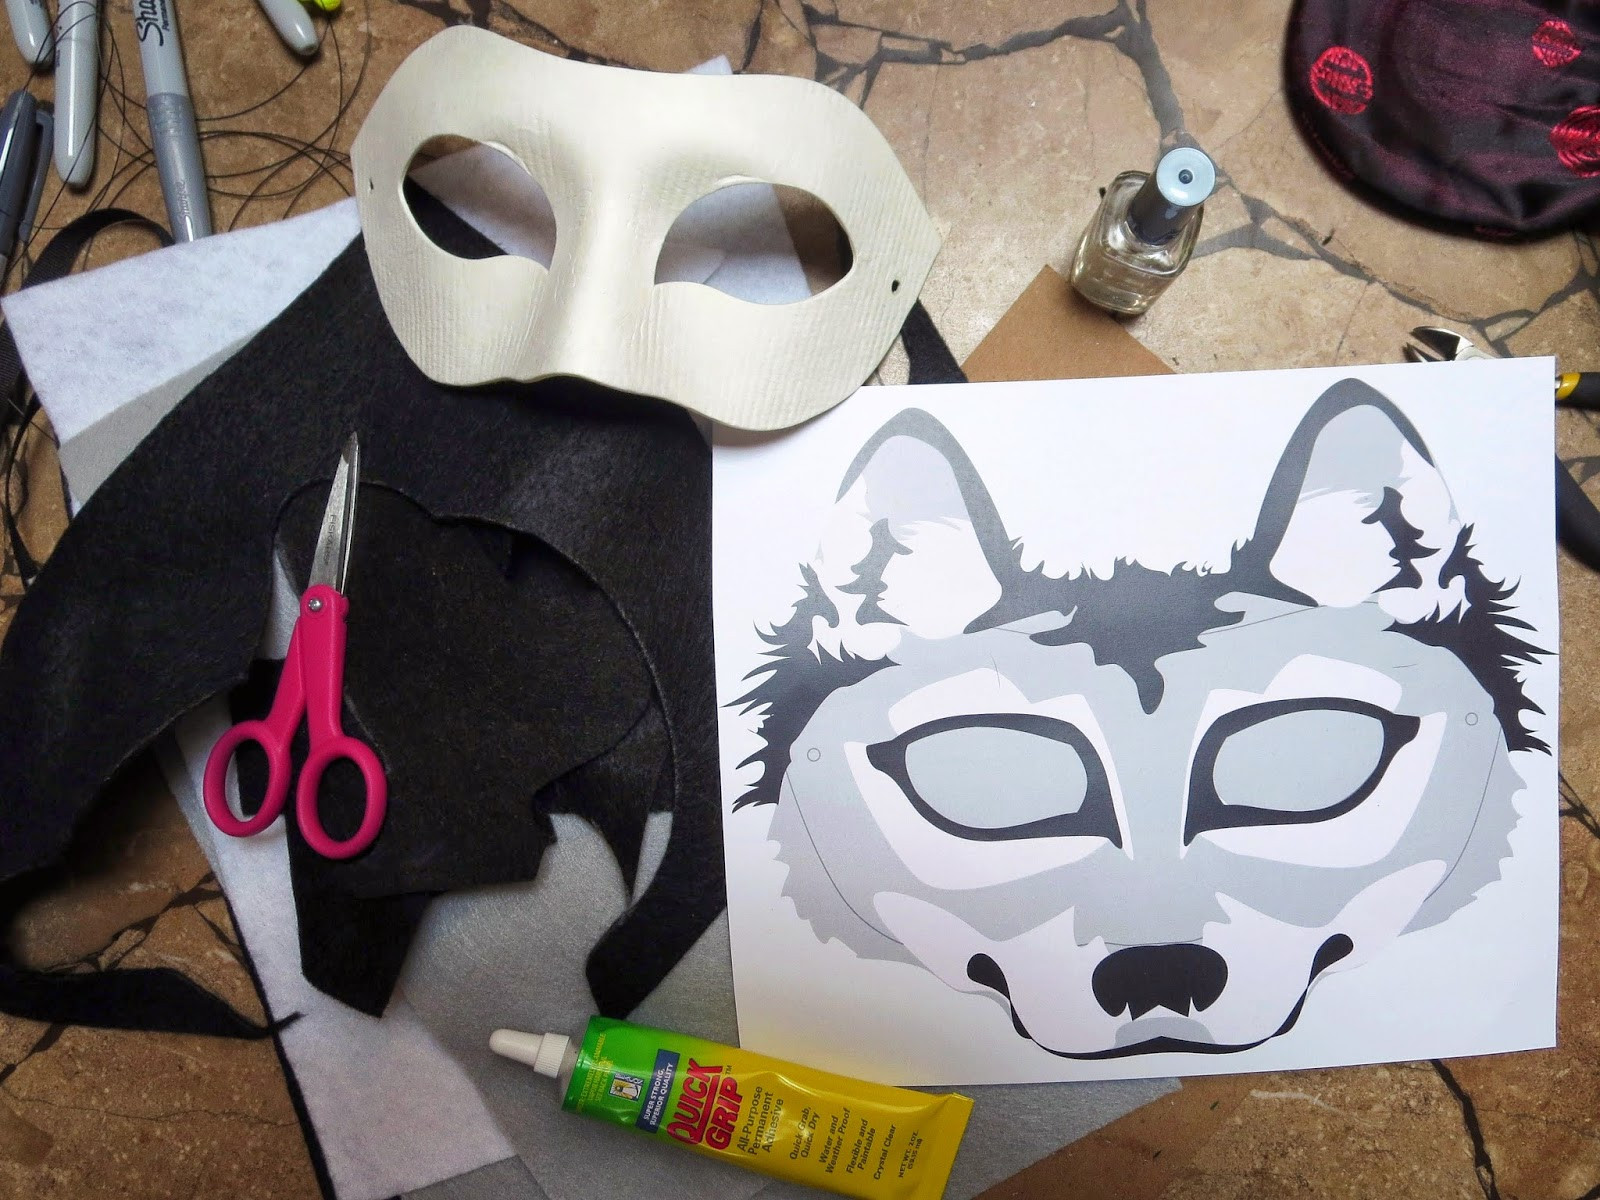 Best ideas about DIY Wolf Mask
. Save or Pin Happenstance Wedding Felt Animal Masks Now.